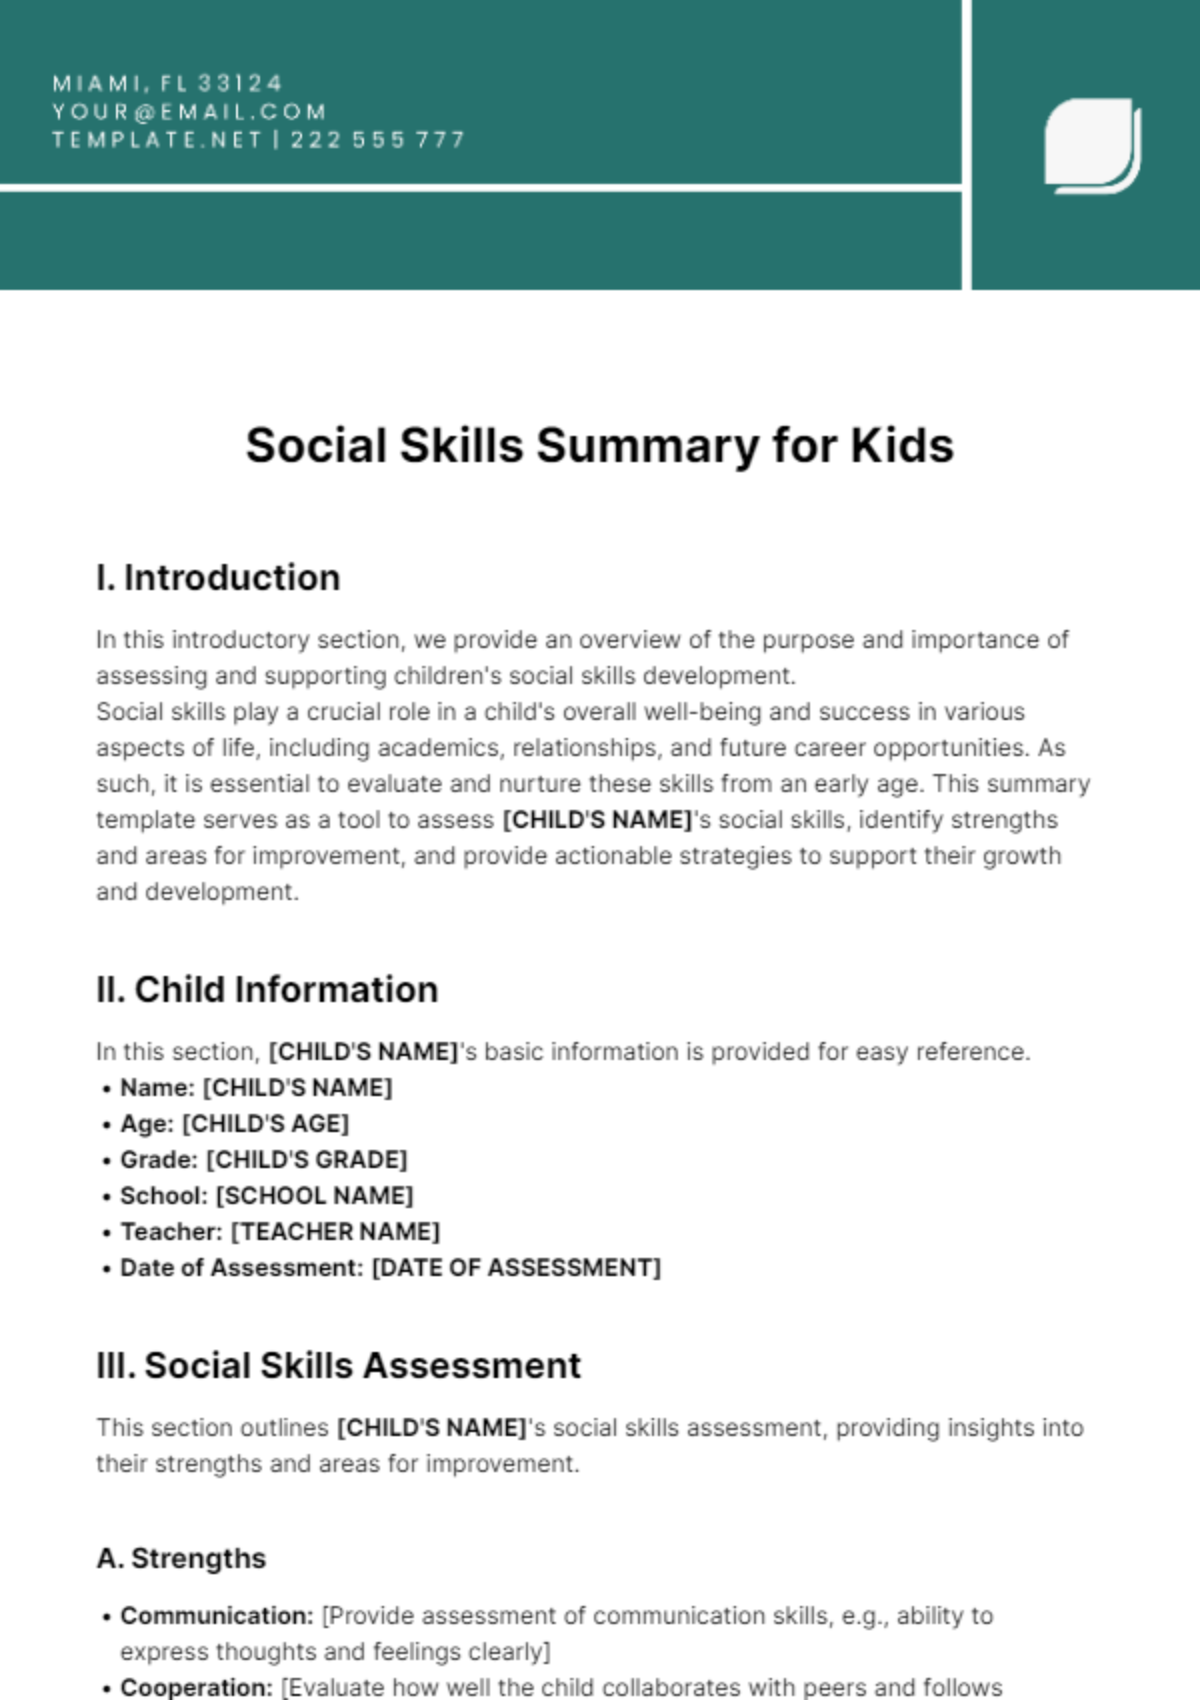 Social Skills Summary for Kids Template